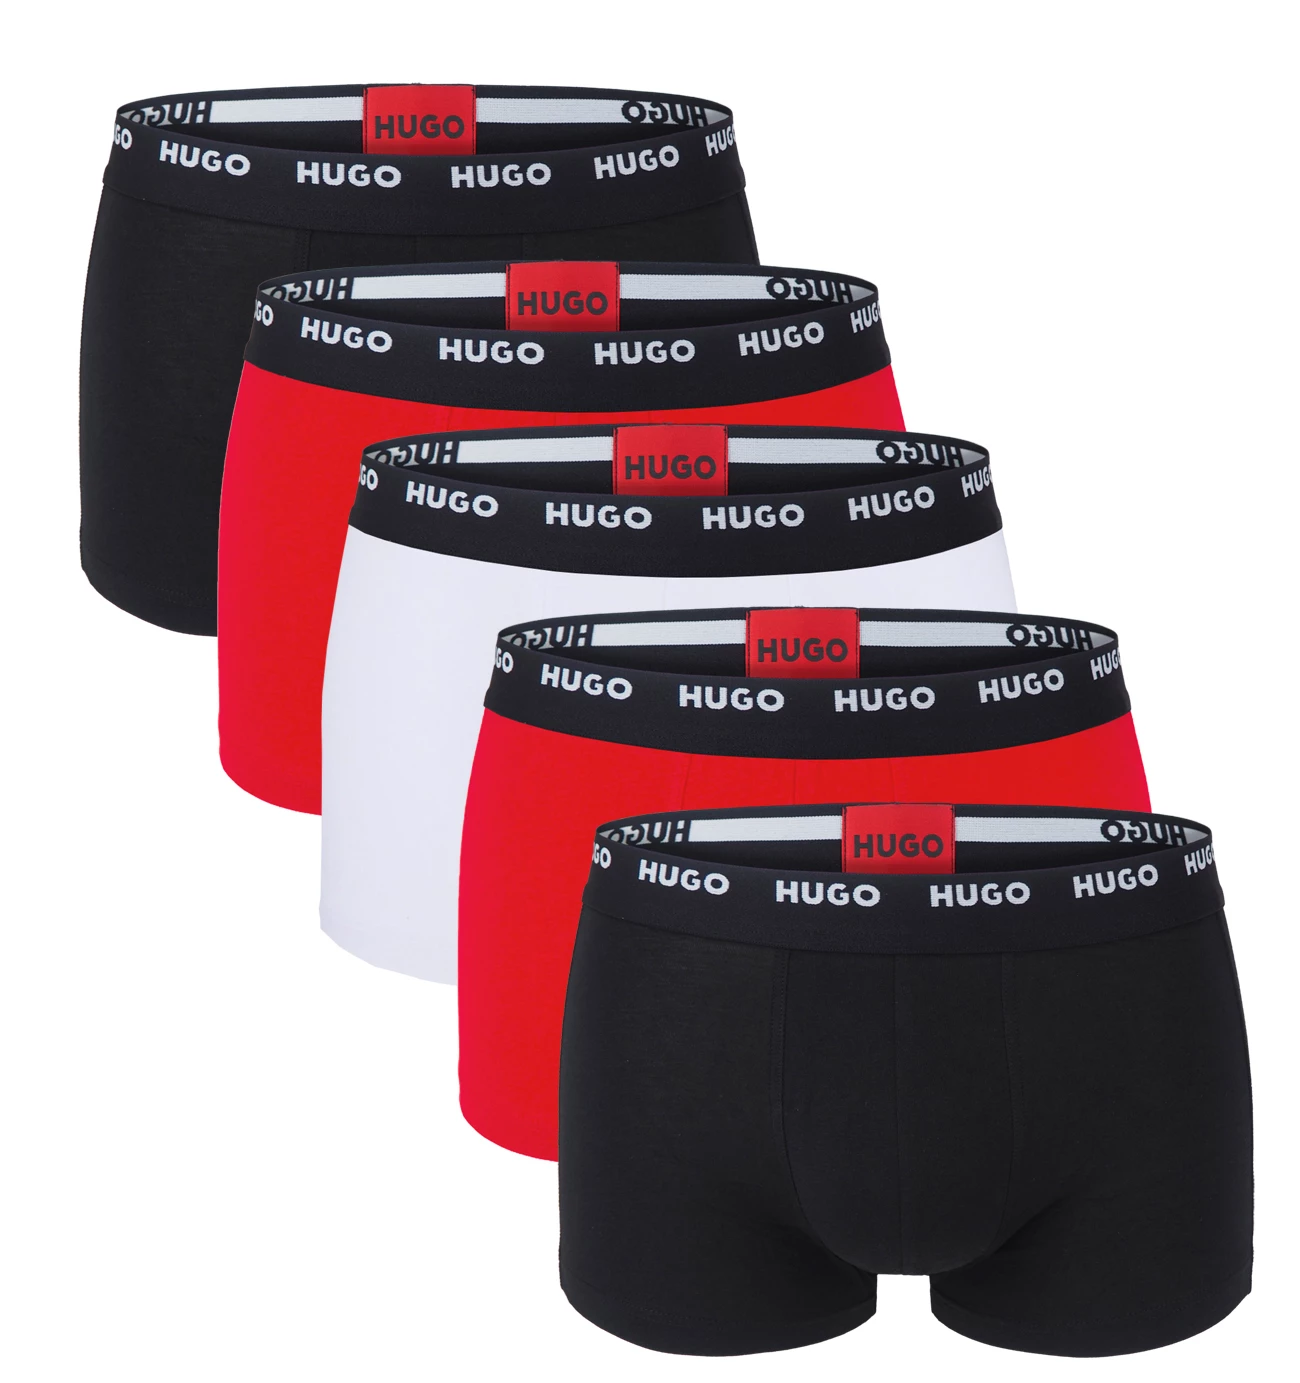 HUGO - boxerky 5PACK cotton stretch black, white, red combo - limitovaná fashion edícia (HUGO BOSS)